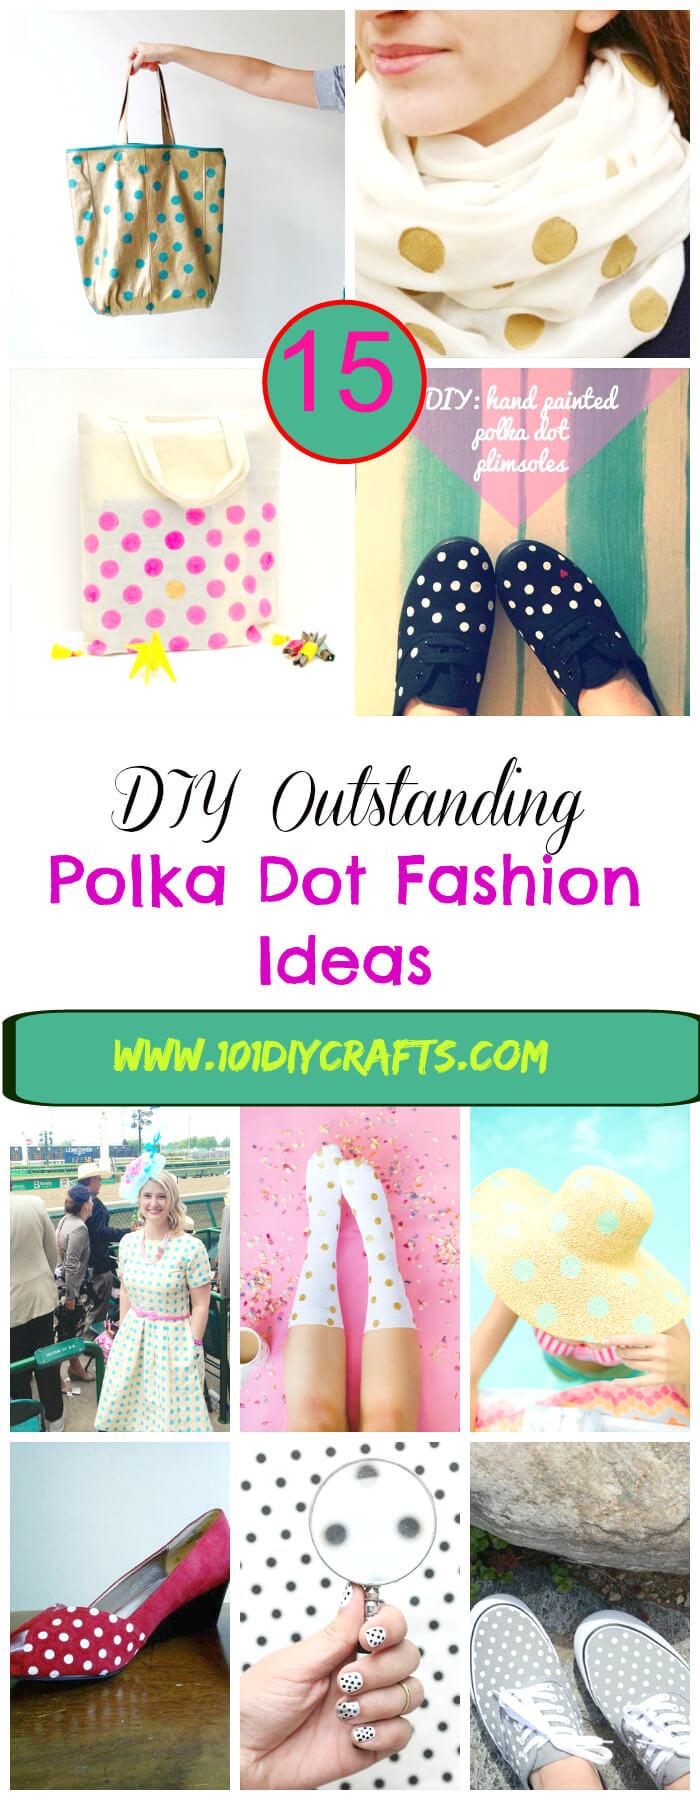 20 DIY Outclass Polka Dot Fashion Ideas